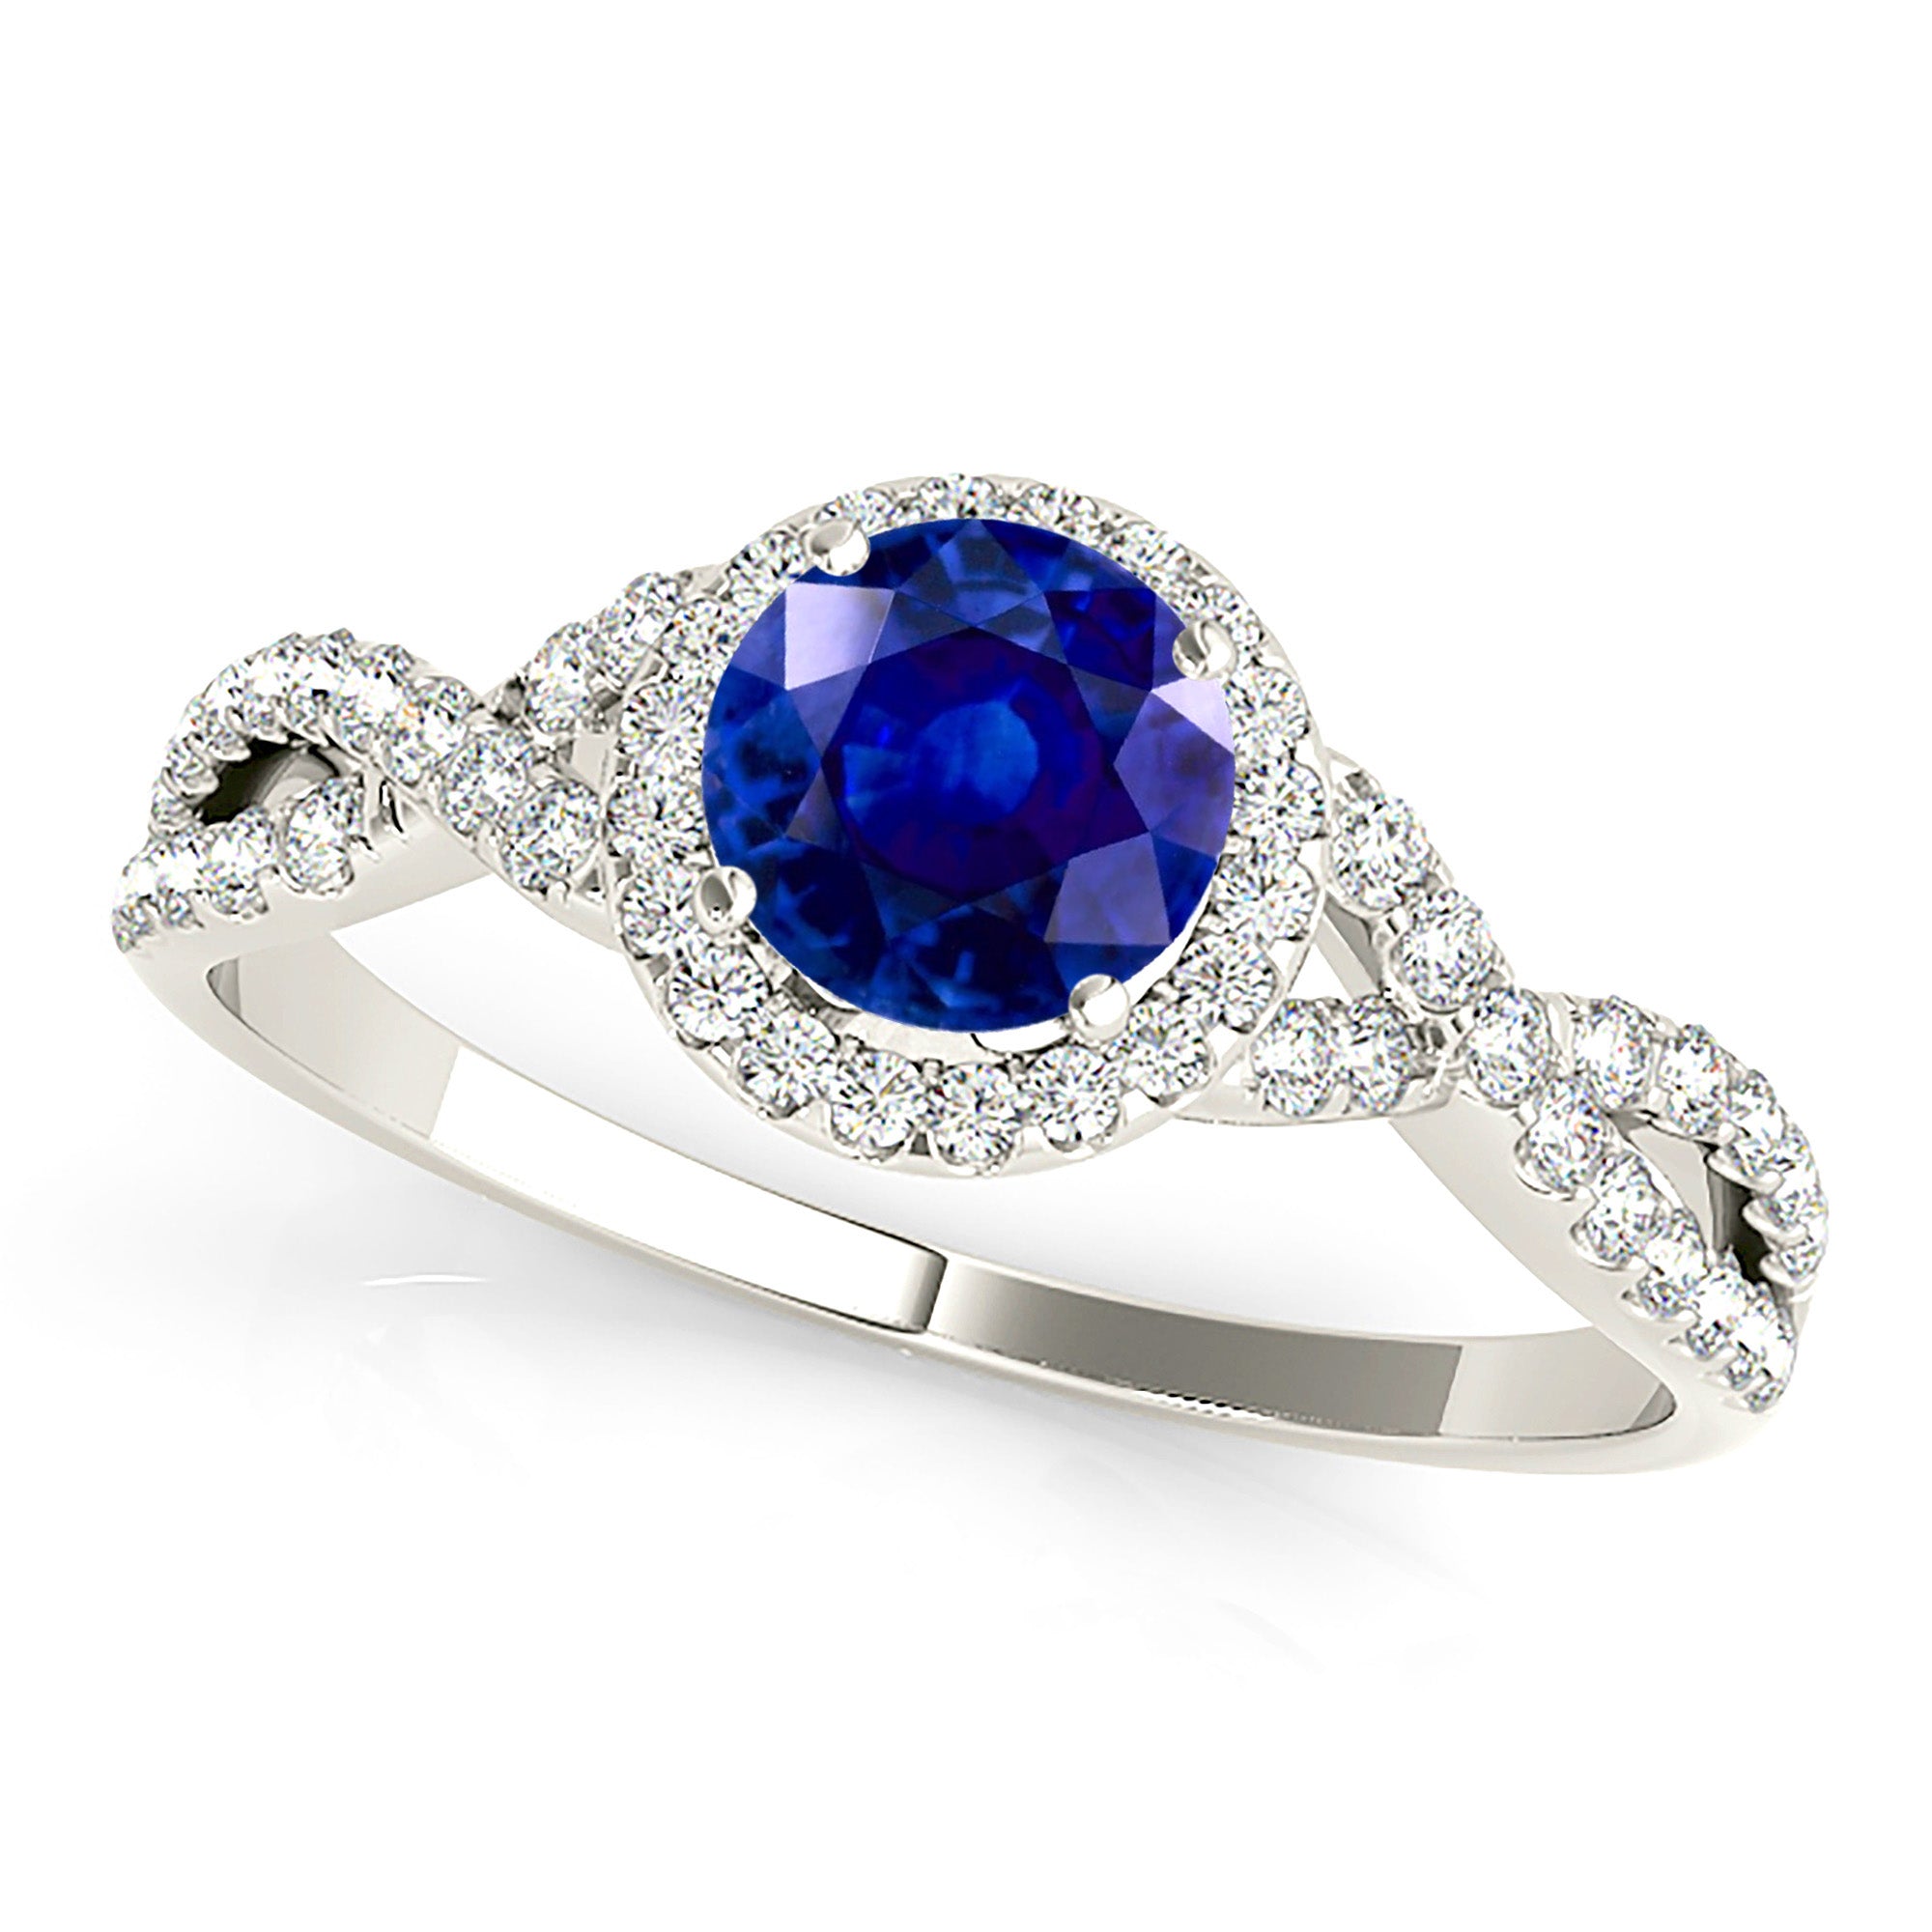 1.35 ct. Genuine Blue Sapphire Ring With 0.25 ctw. Diamond Halo, Open Braided Diamond Band | Natural Sapphire And Diamond Gemstone Ring-in 14K/18K White, Yellow, Rose Gold and Platinum - Christmas Jewelry Gift -VIRABYANI